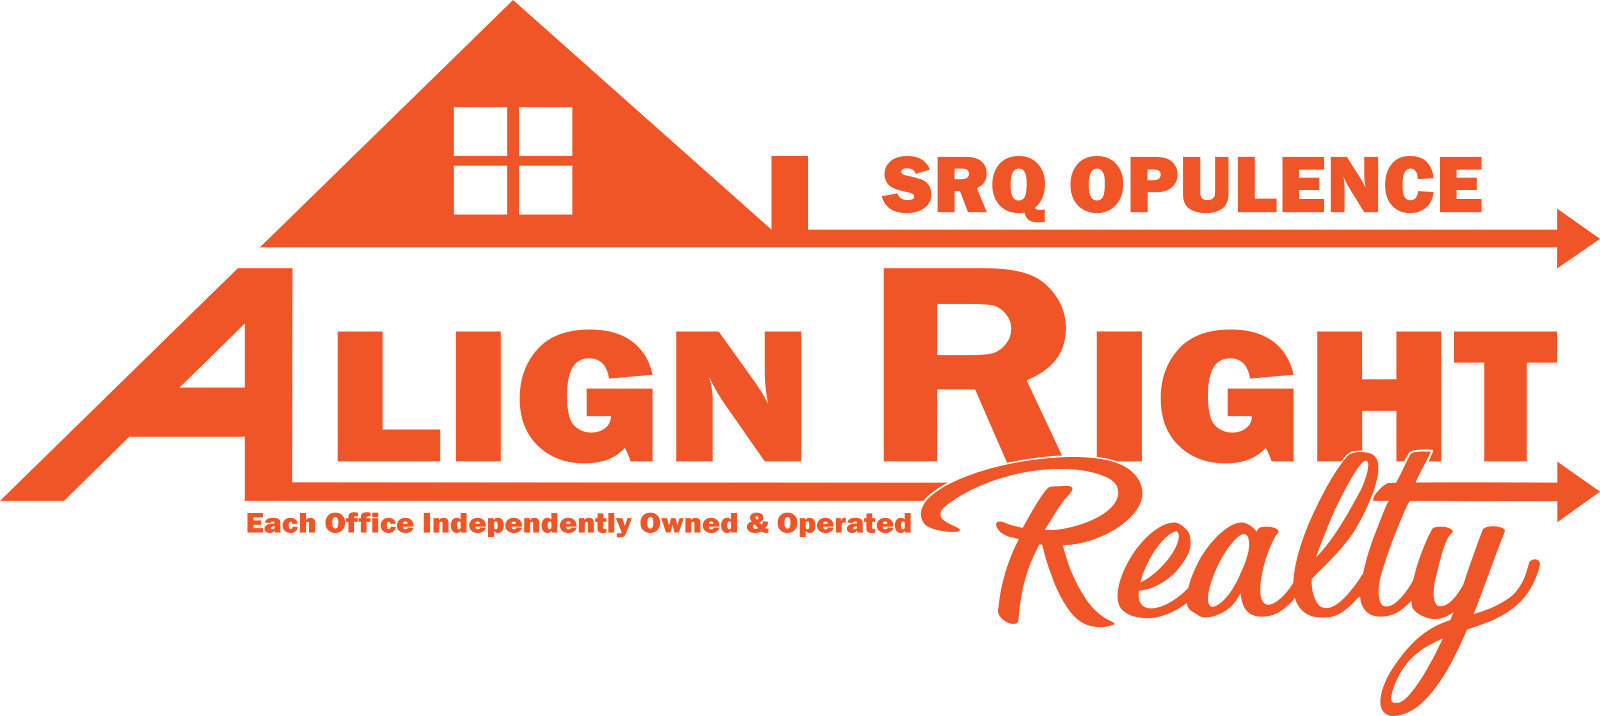 Align Right Realty SRQ Opulence